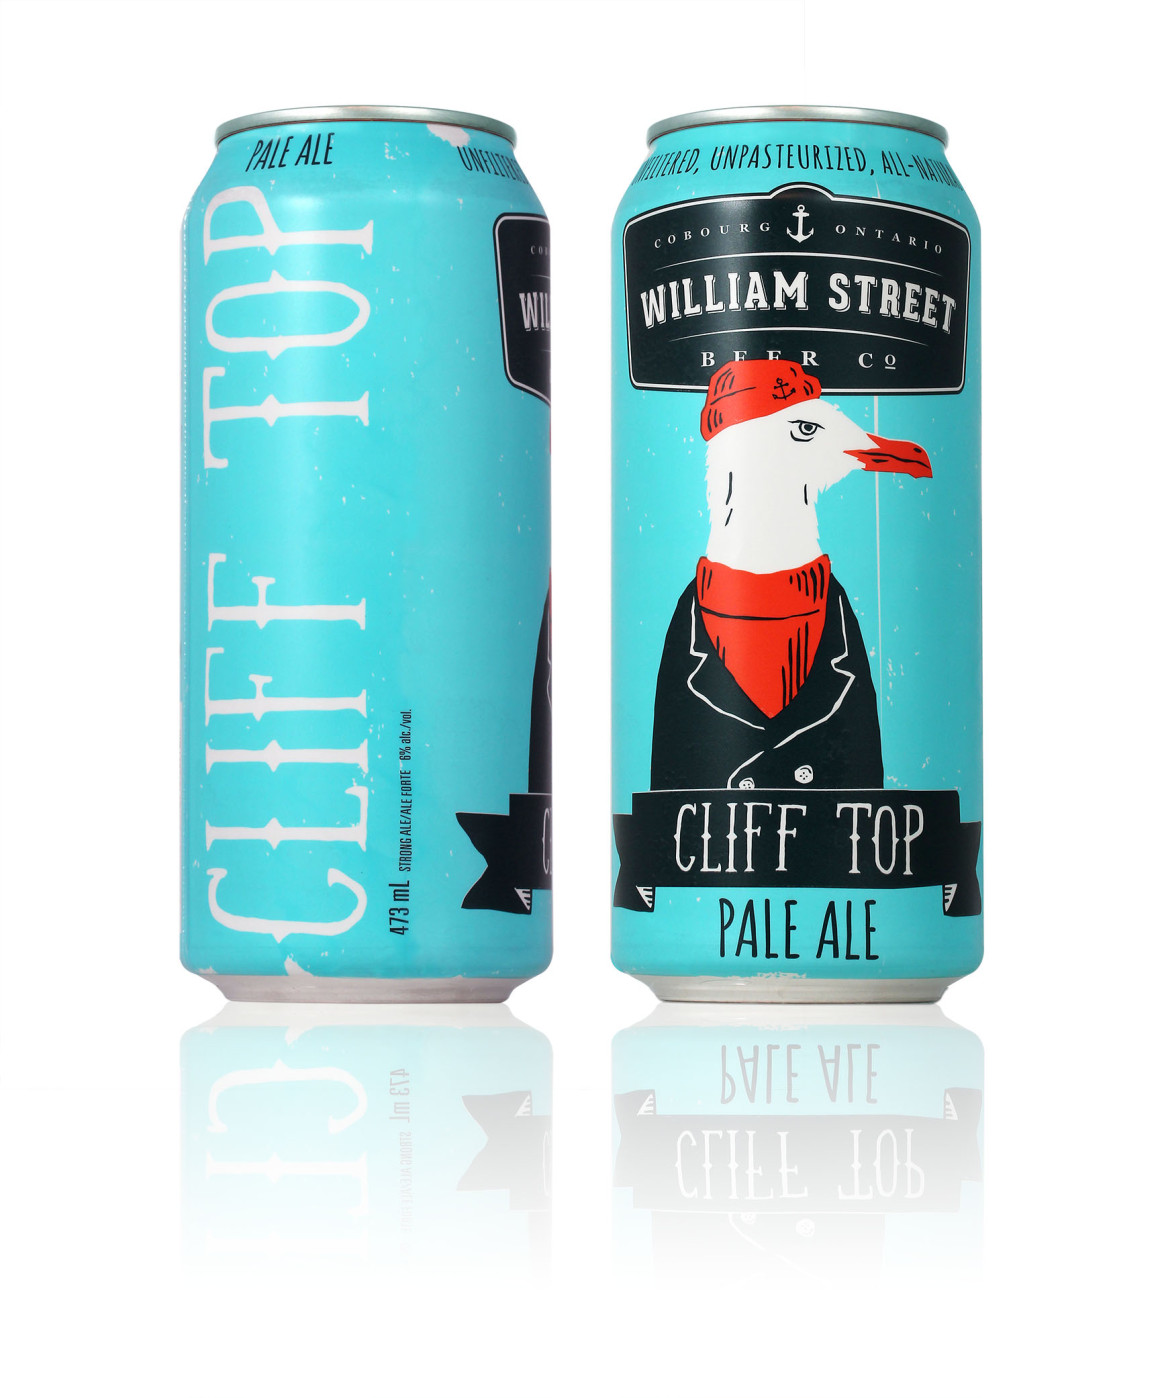 Cliff Top Pale Ale – William Street Beer Co. – Luke Despatie & The Design Firm